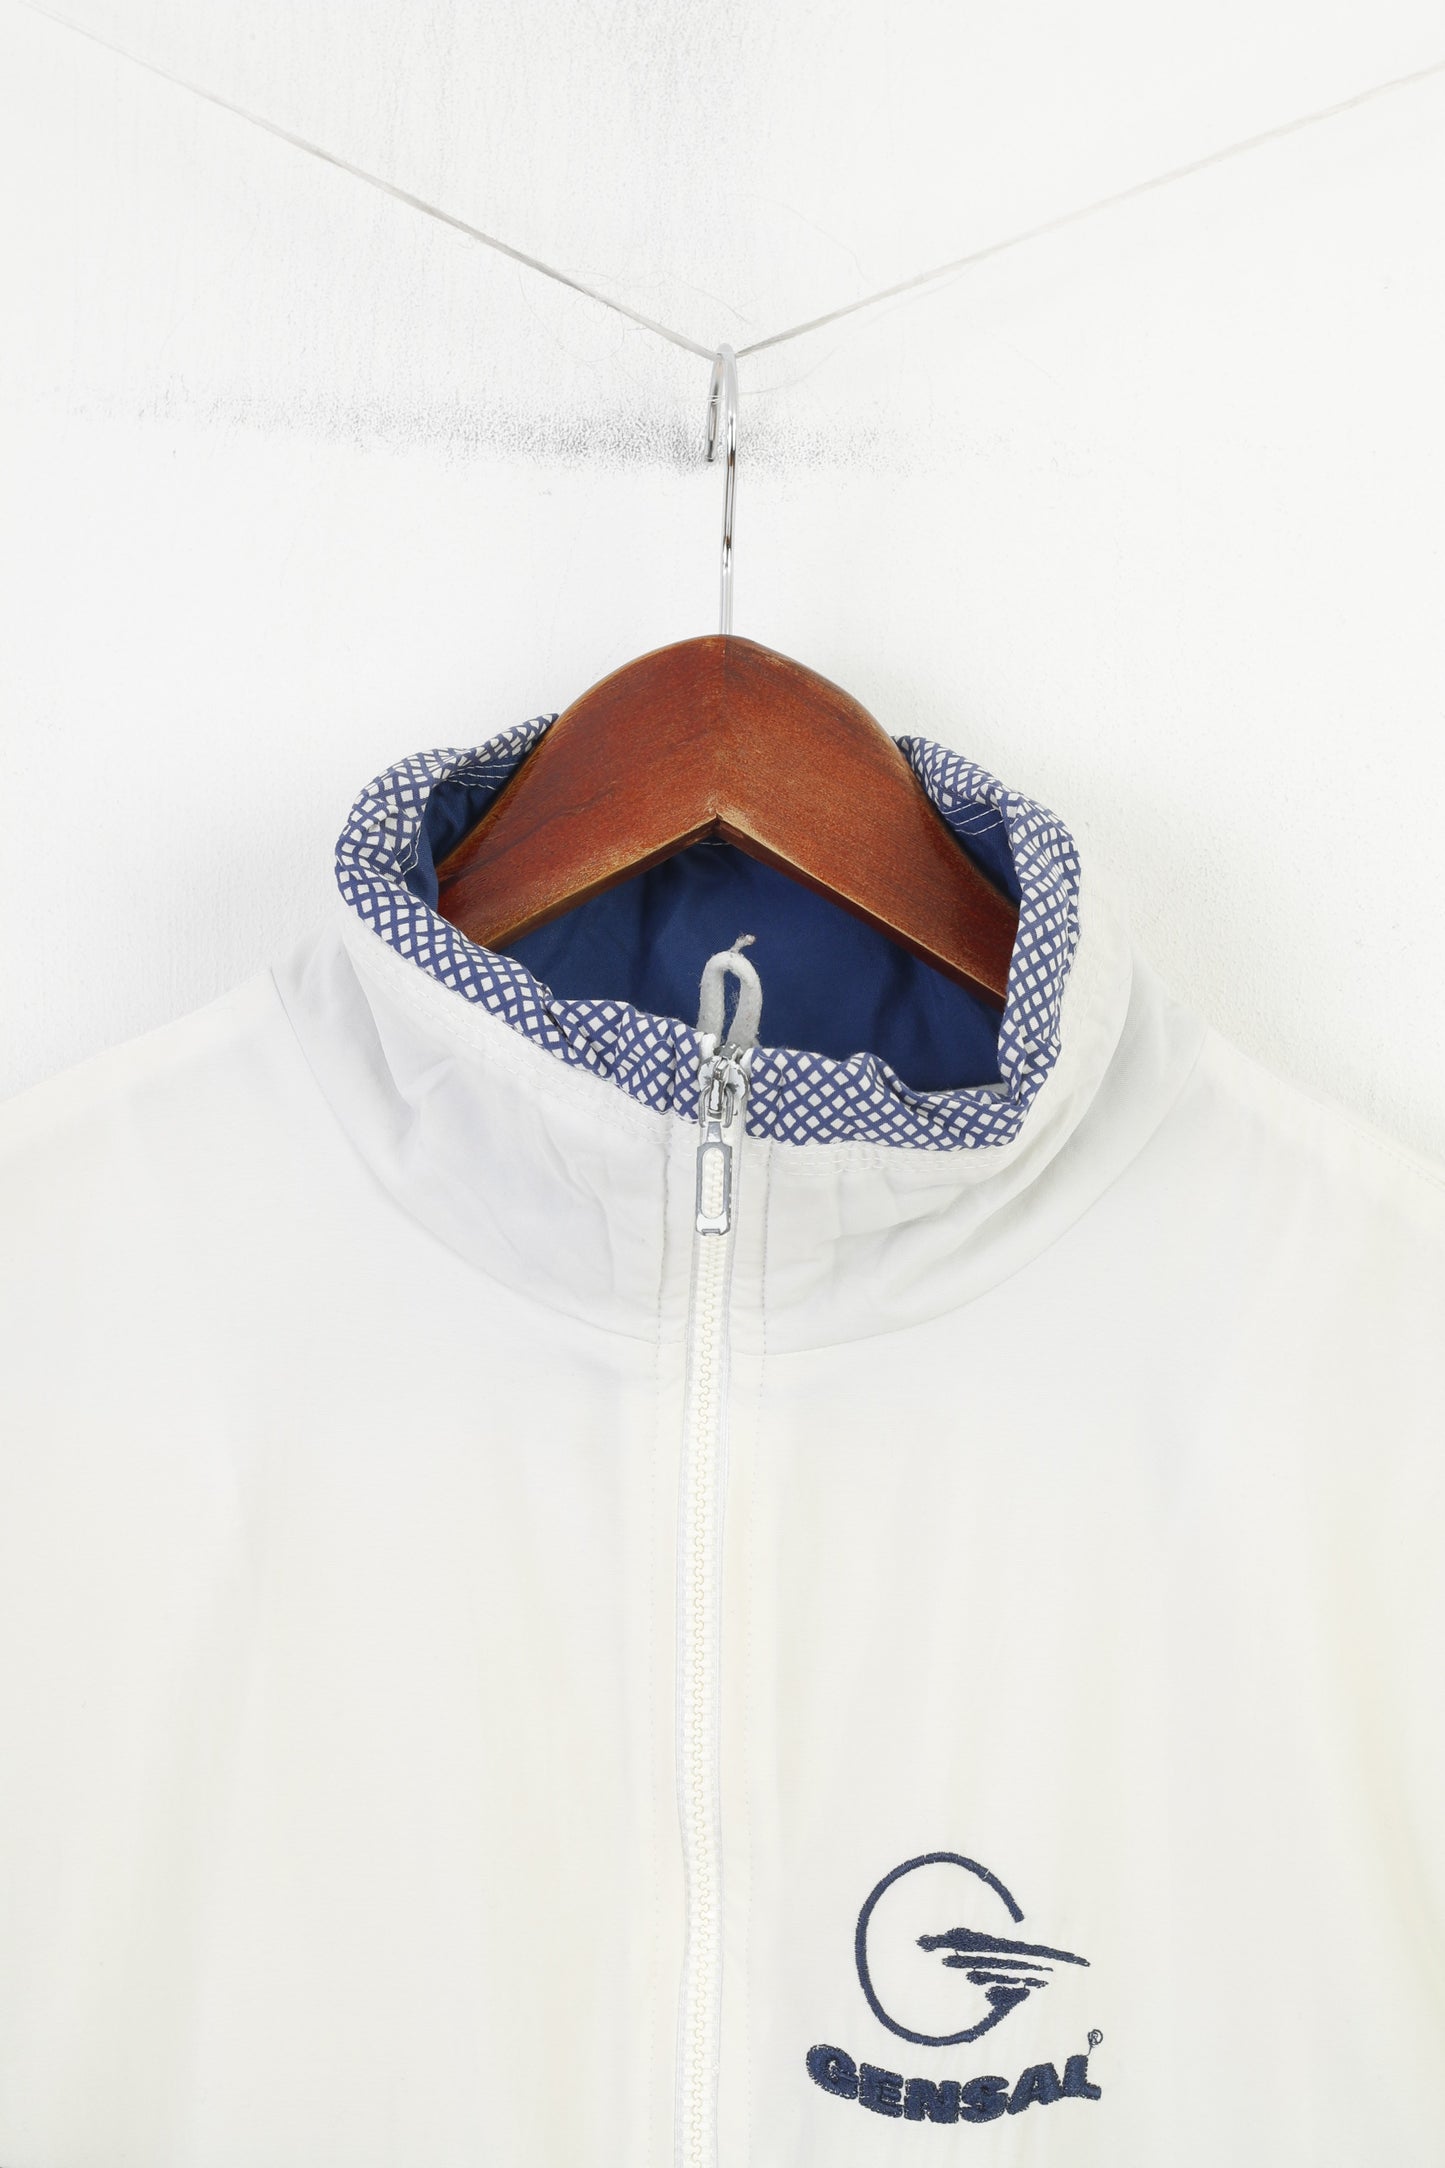 Gensal Men M Jacket White Blue Full Zipper Lightweight Removable Sleeves Vintage Top